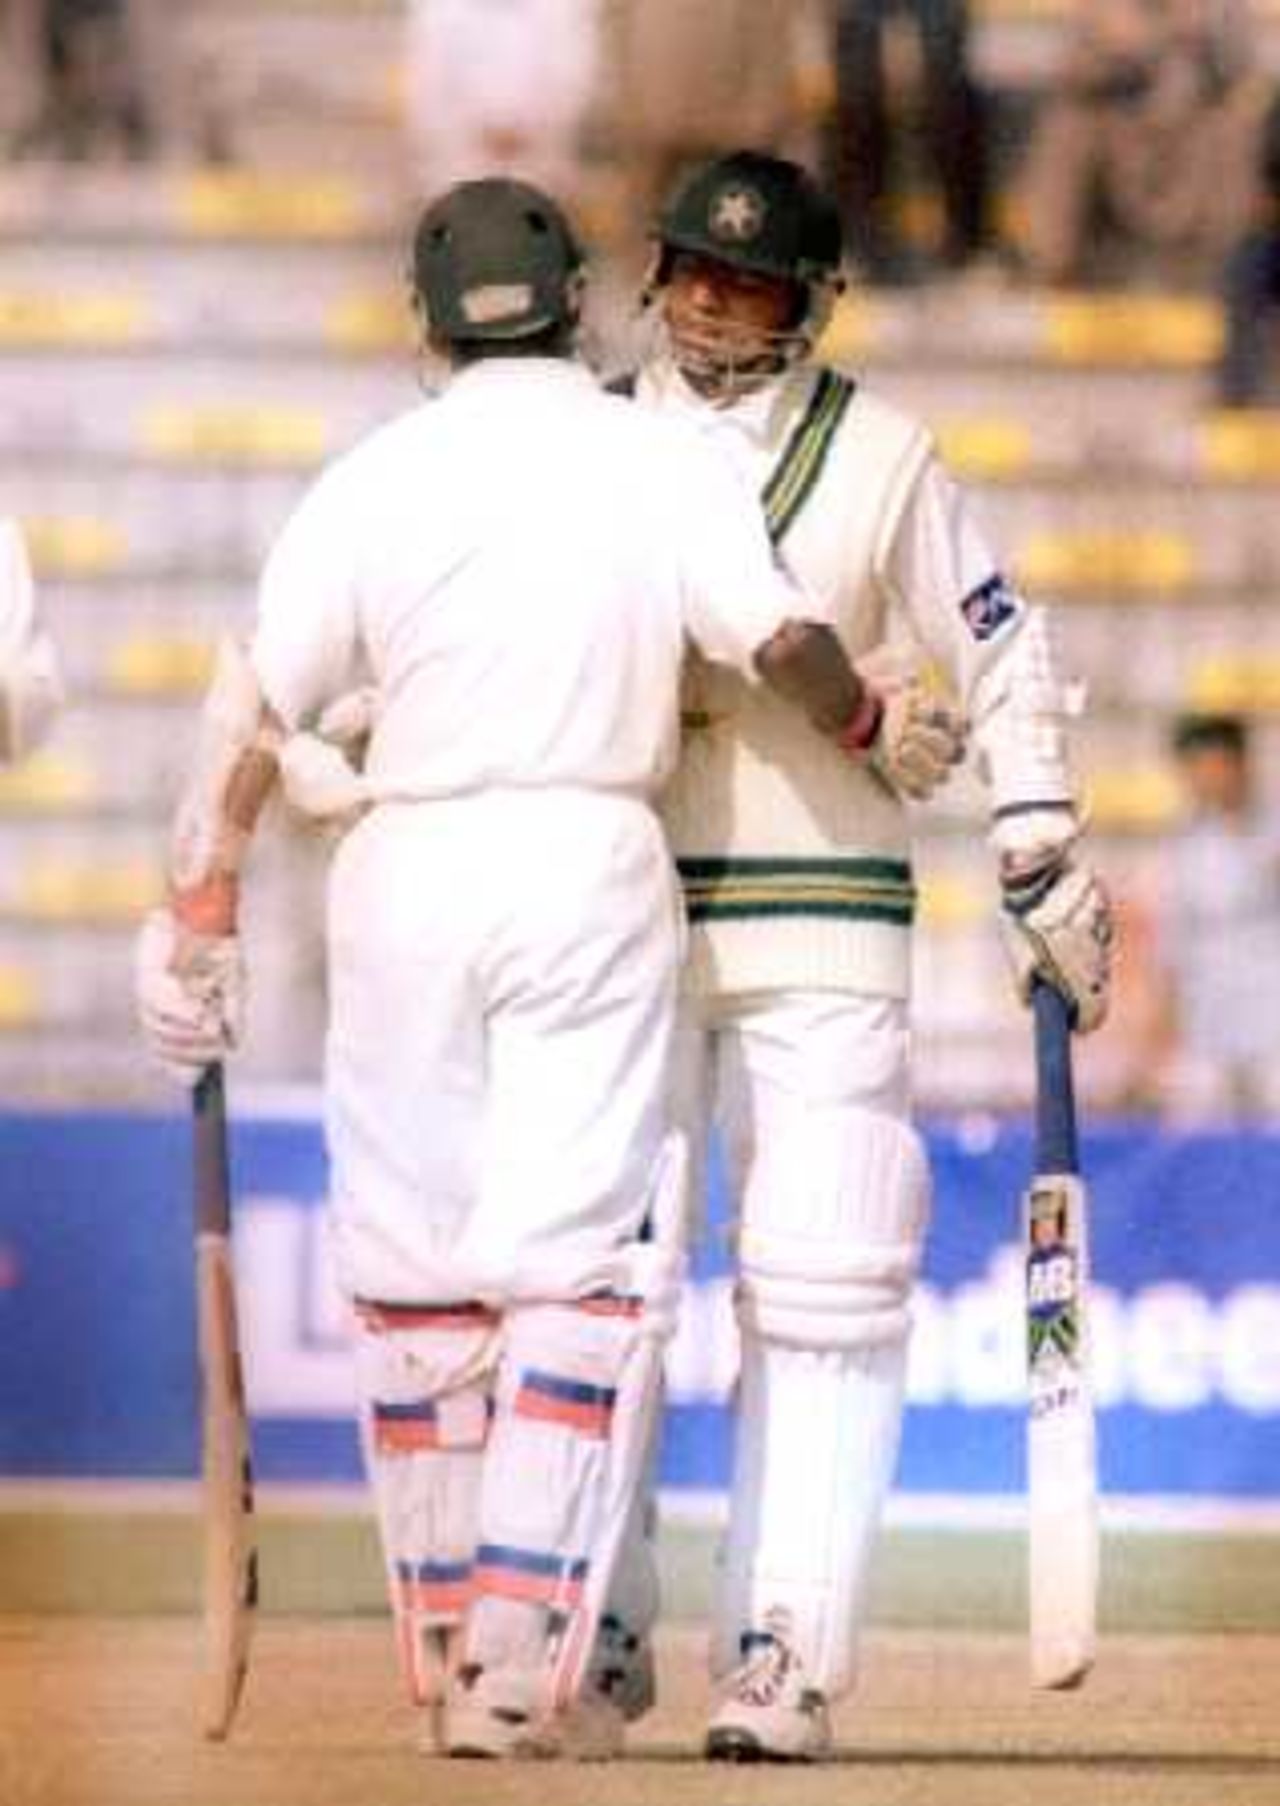 Saqlain congratulates Youhana for his fine knock, 1st Test Match, Pakistan v England at Lahore, 15-19 Nov 2000